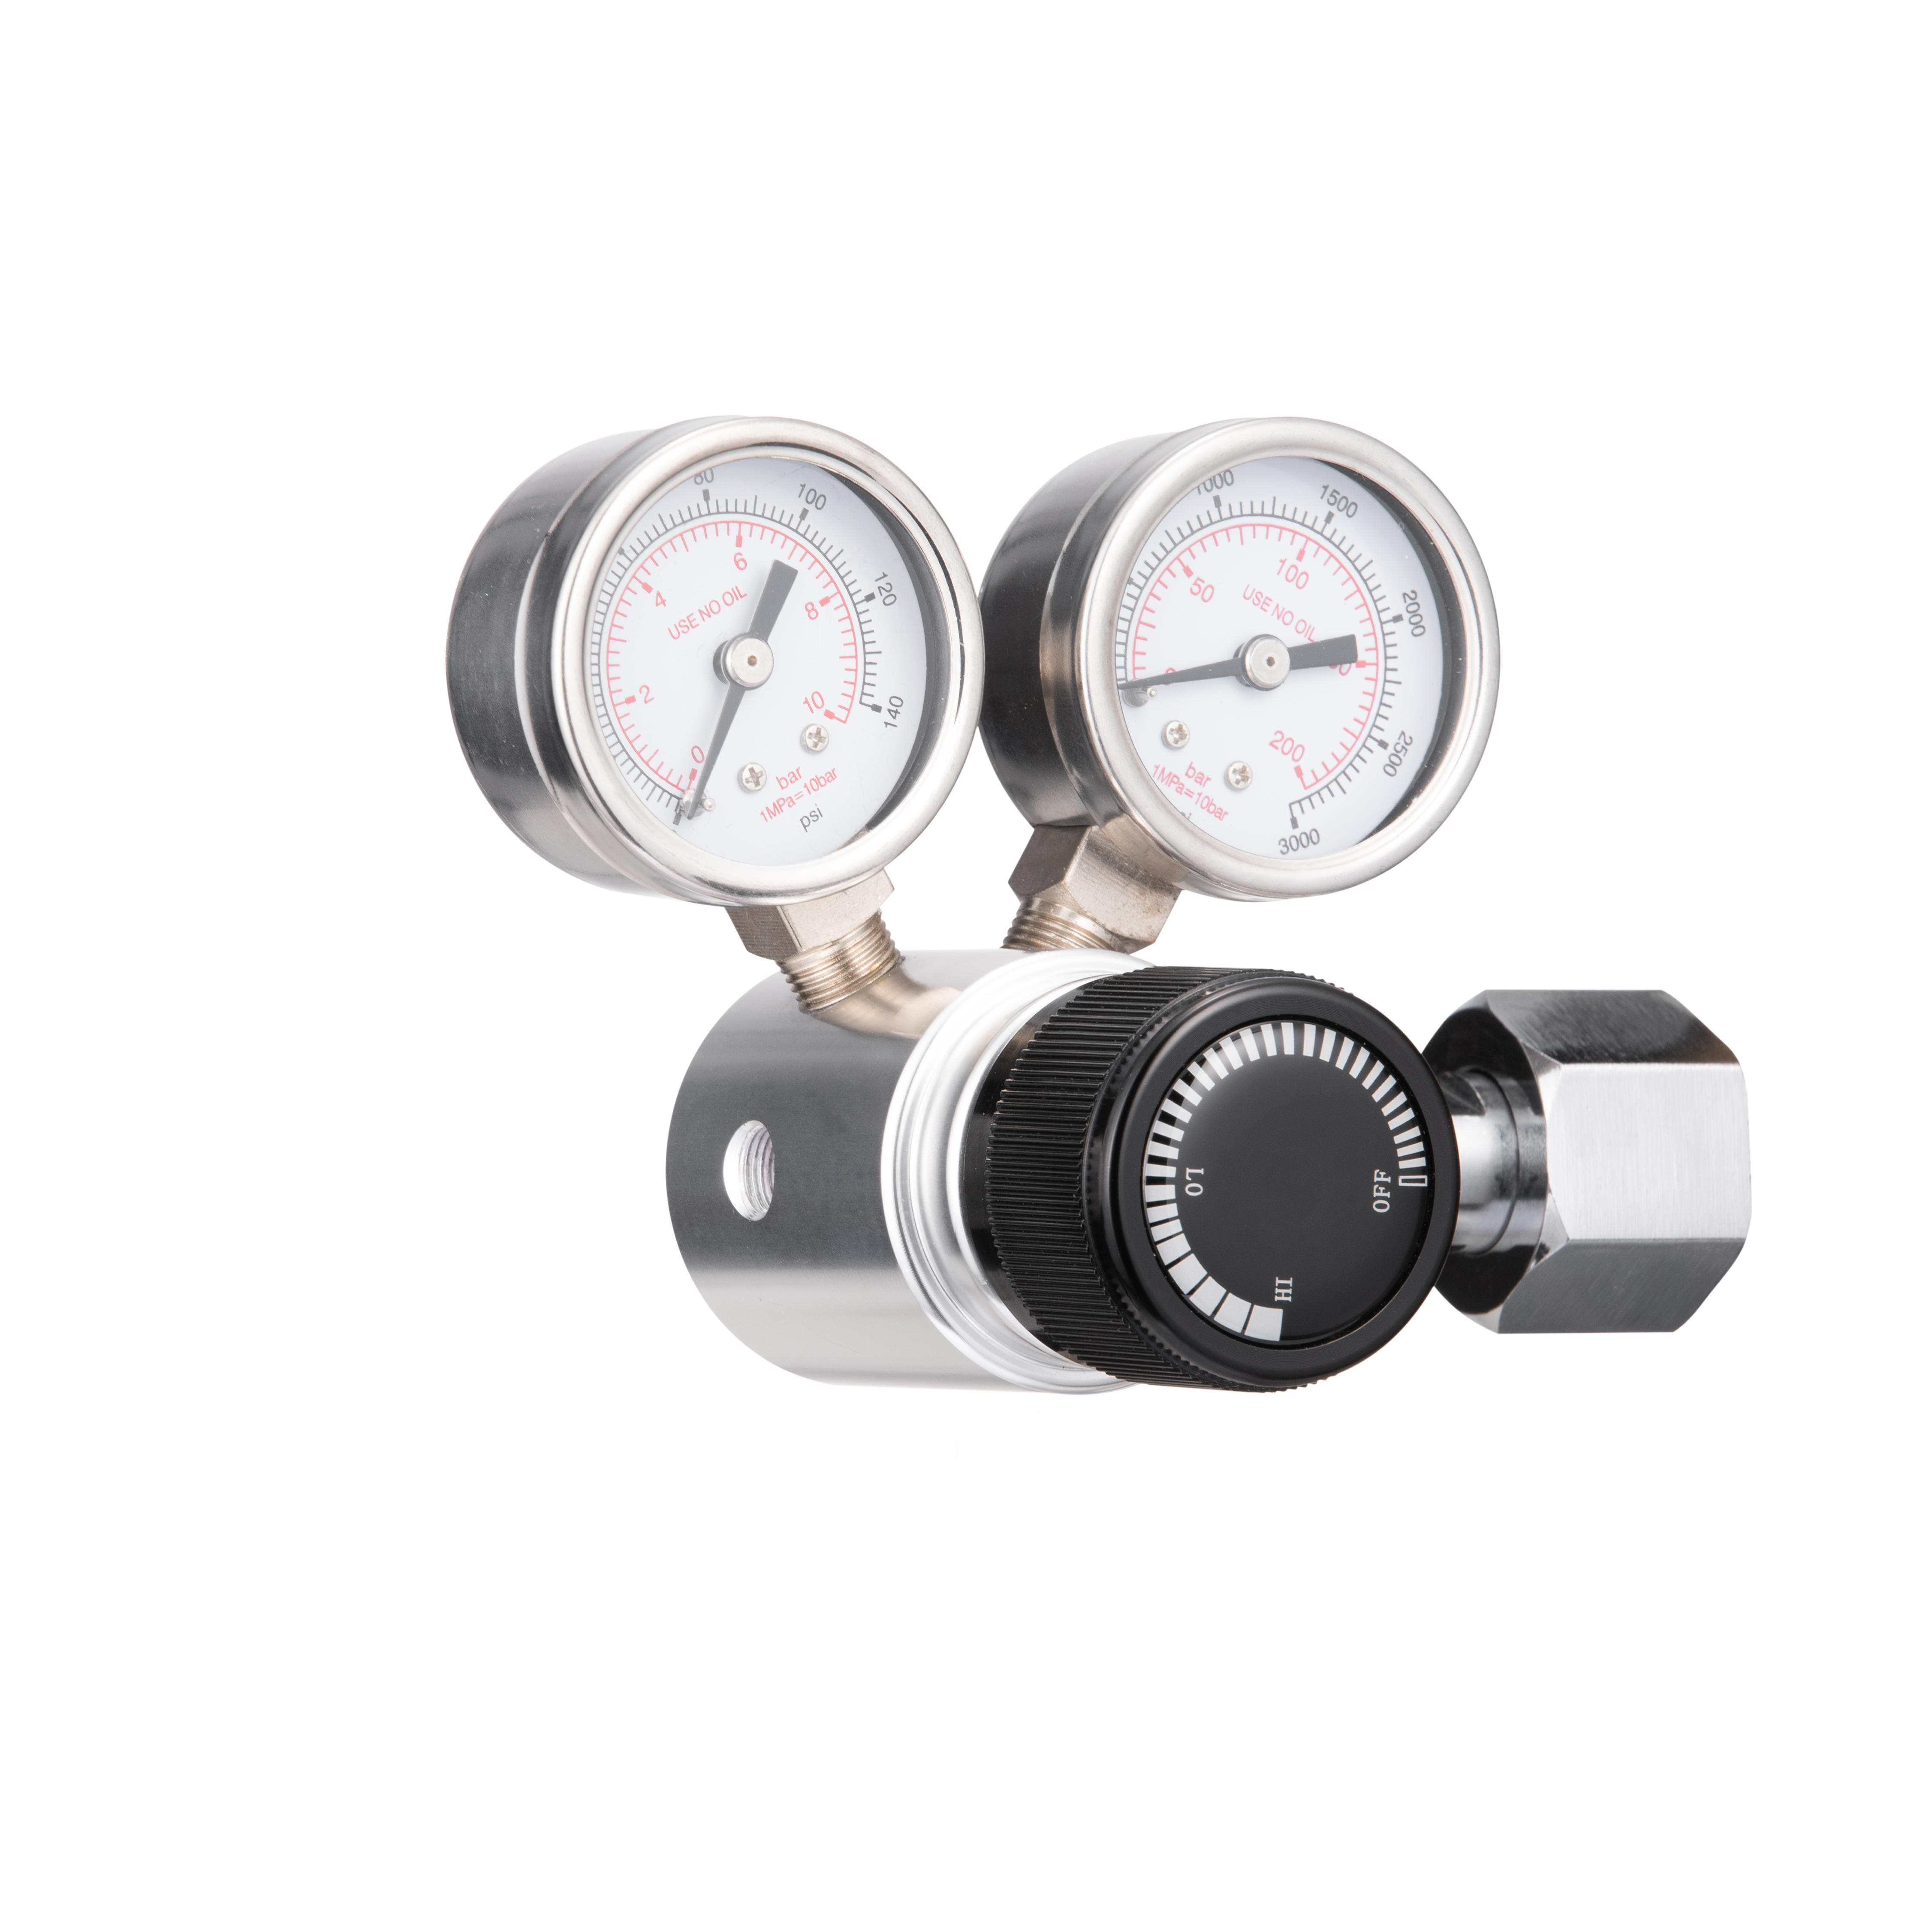 Co2 pressure regulator for aquascaping